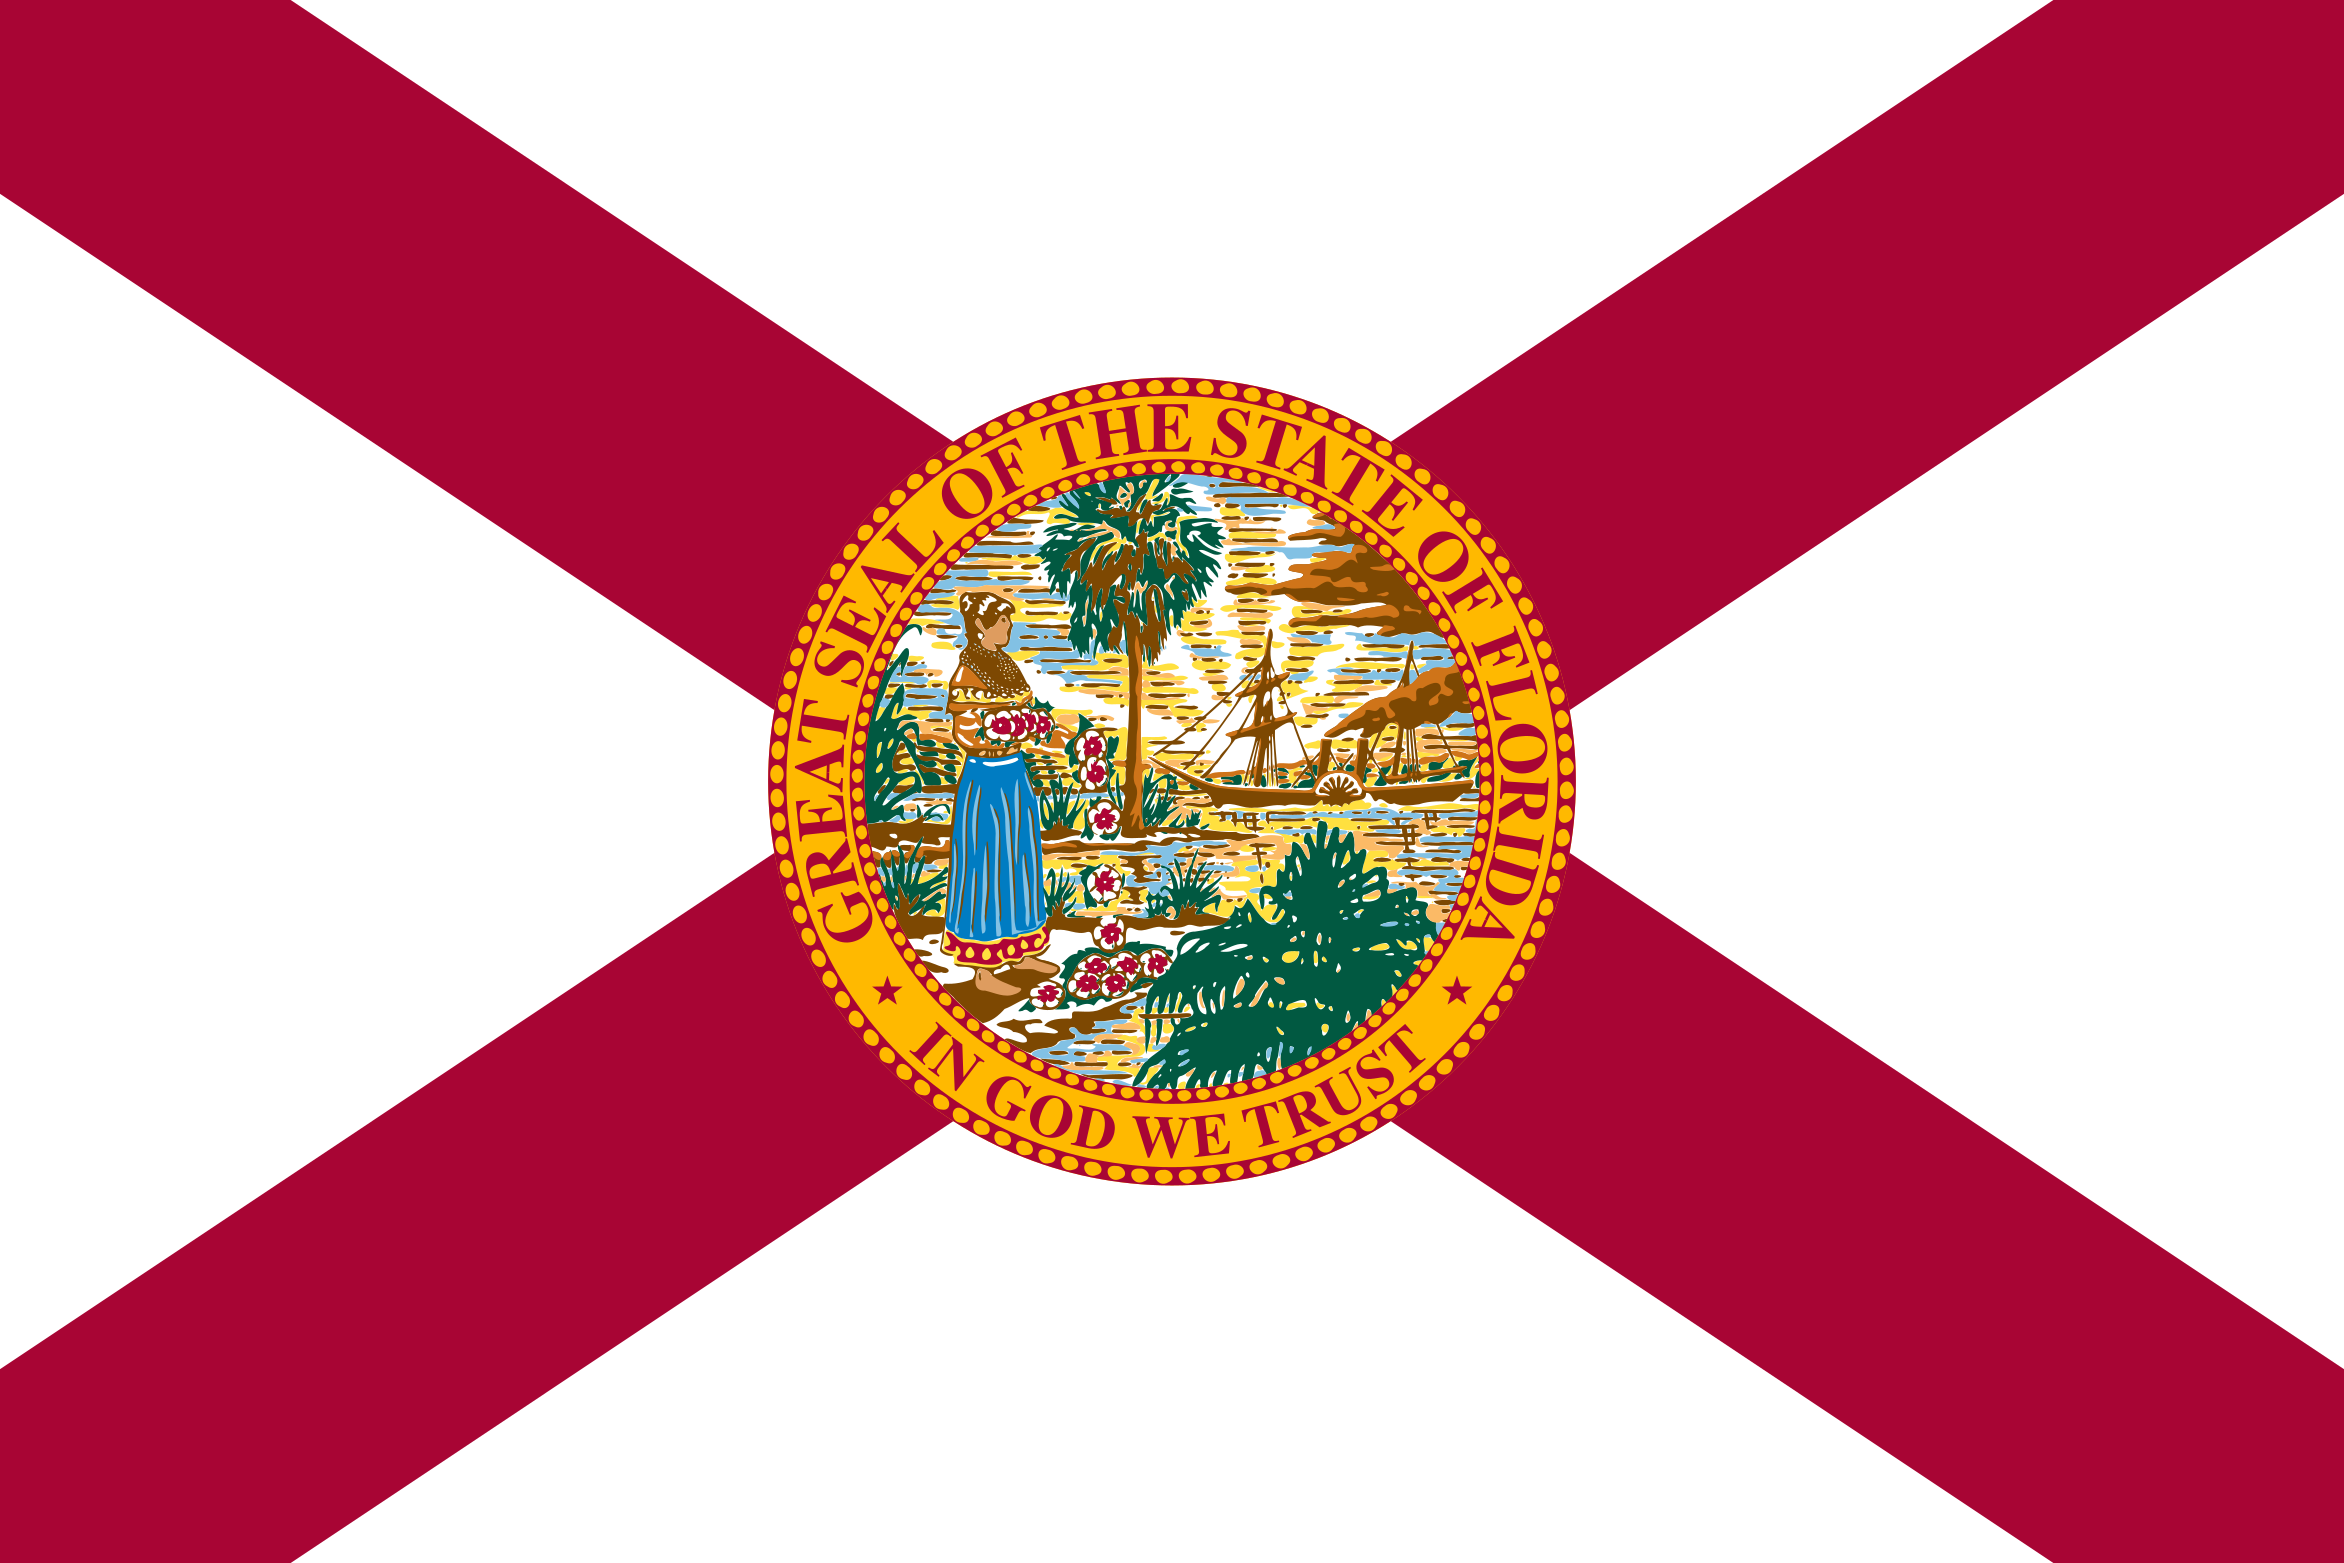 Free Florida Flag Images: AI, EPS, GIF, JPG, PDF, PNG, SVG and more!